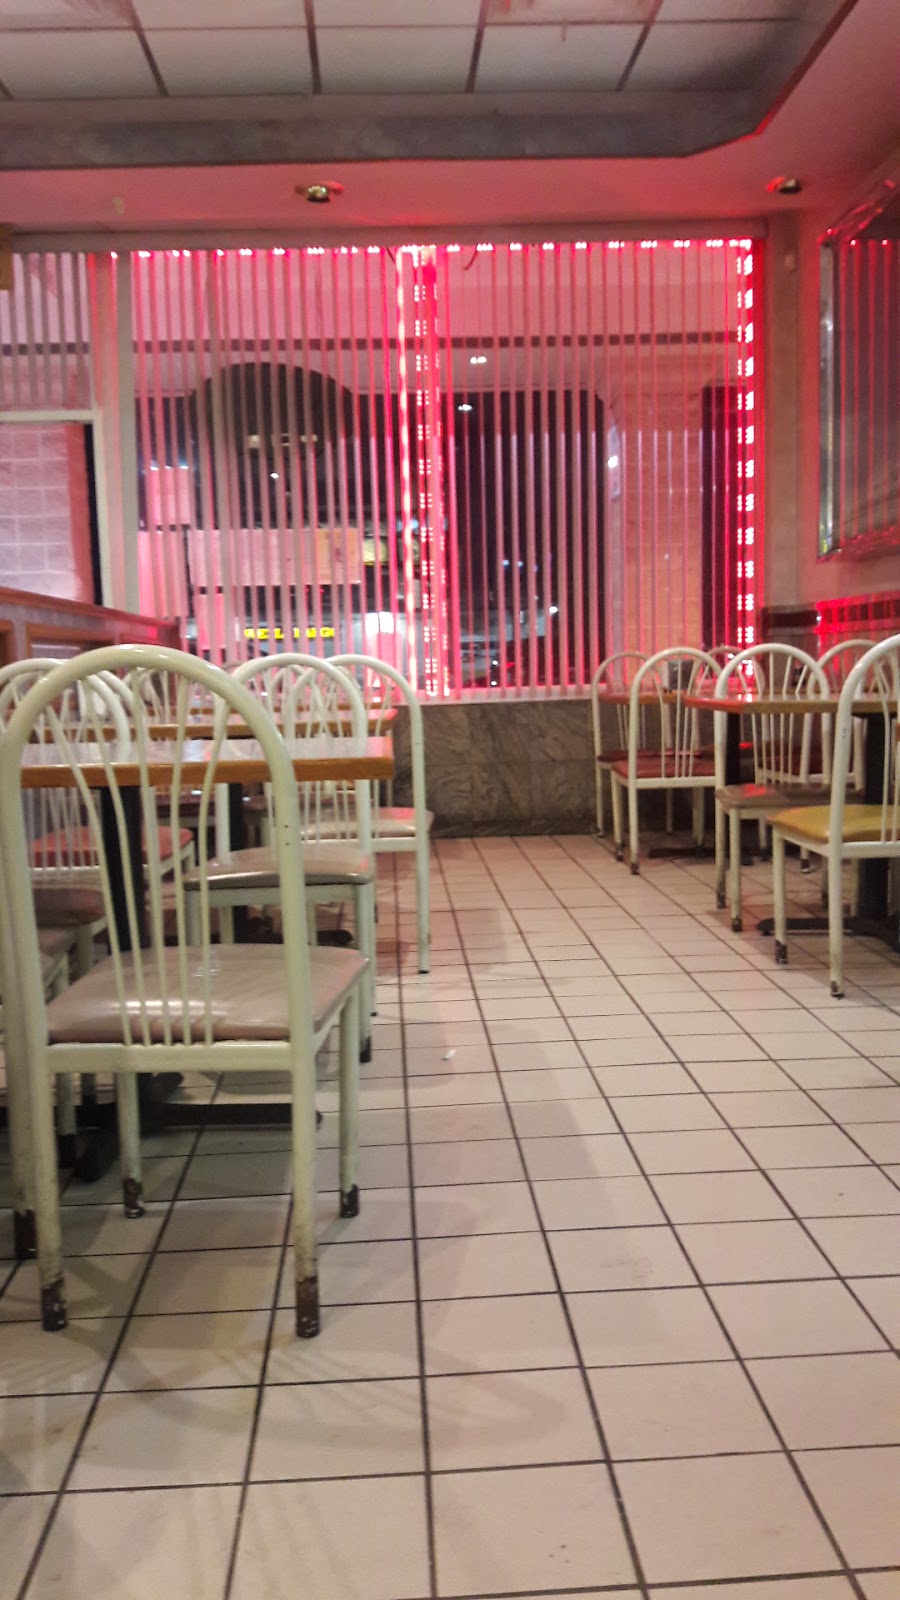 Beijing Chinese Restaurant | 3260 Red Lion Rd, Philadelphia, PA 19114 | Phone: (215) 281-2888